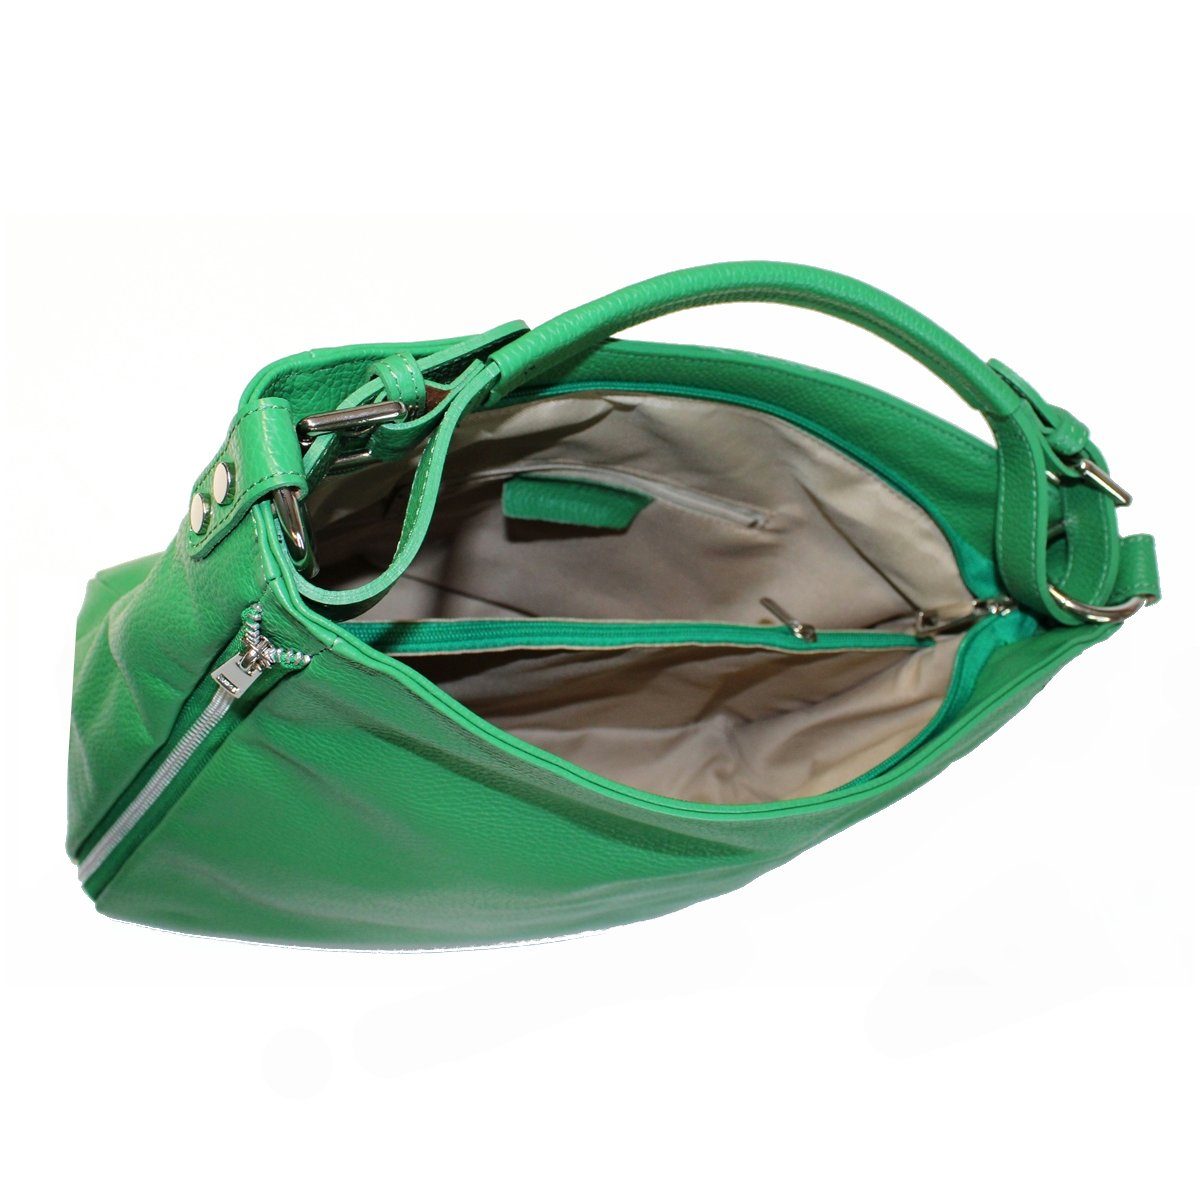 fs-bags Handtasche Grün in fs7142, Made Italy